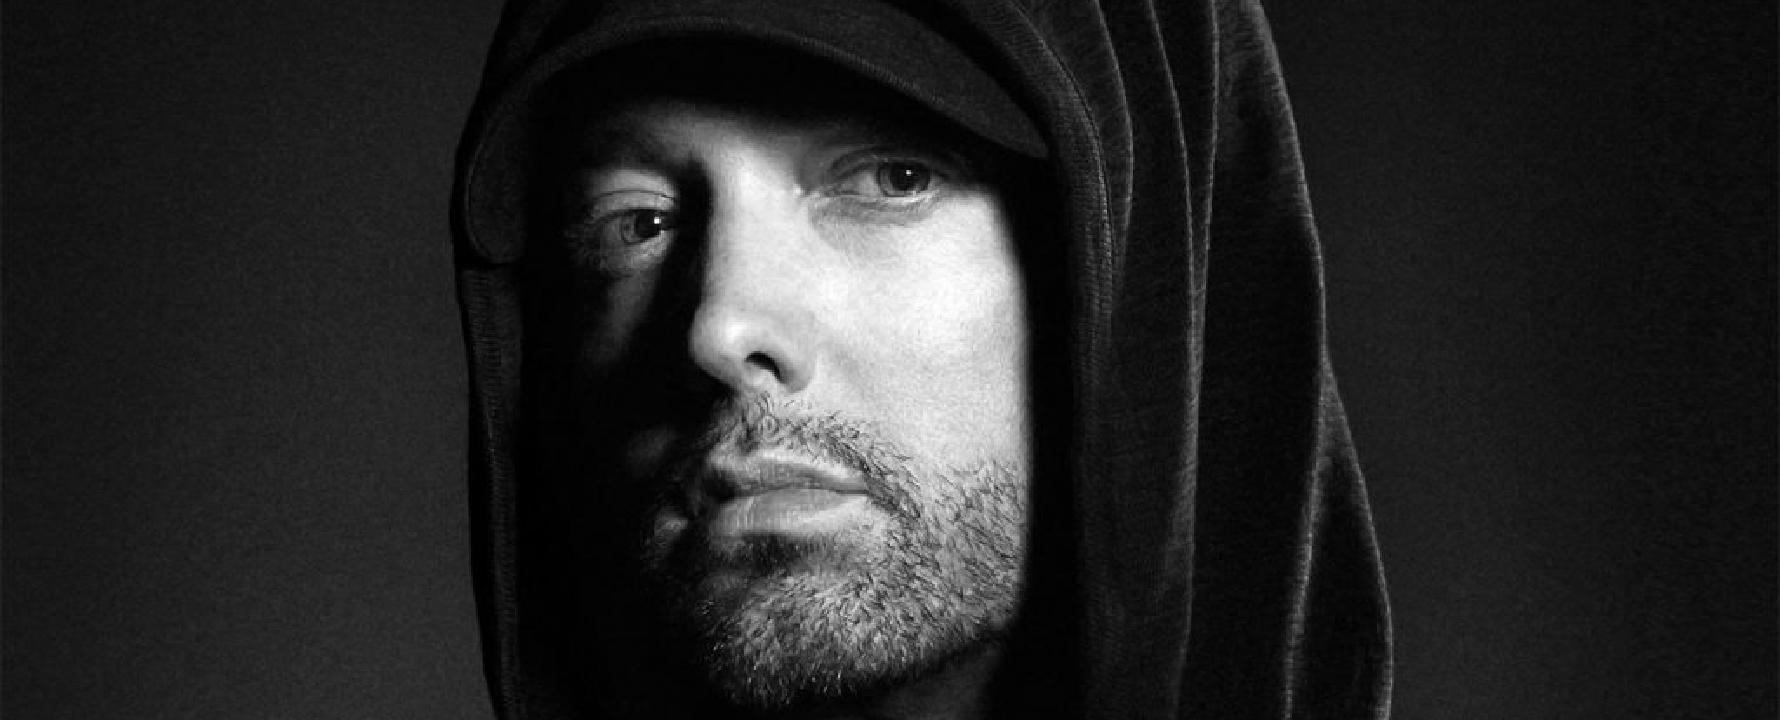 Fotografía promocional de Eminem